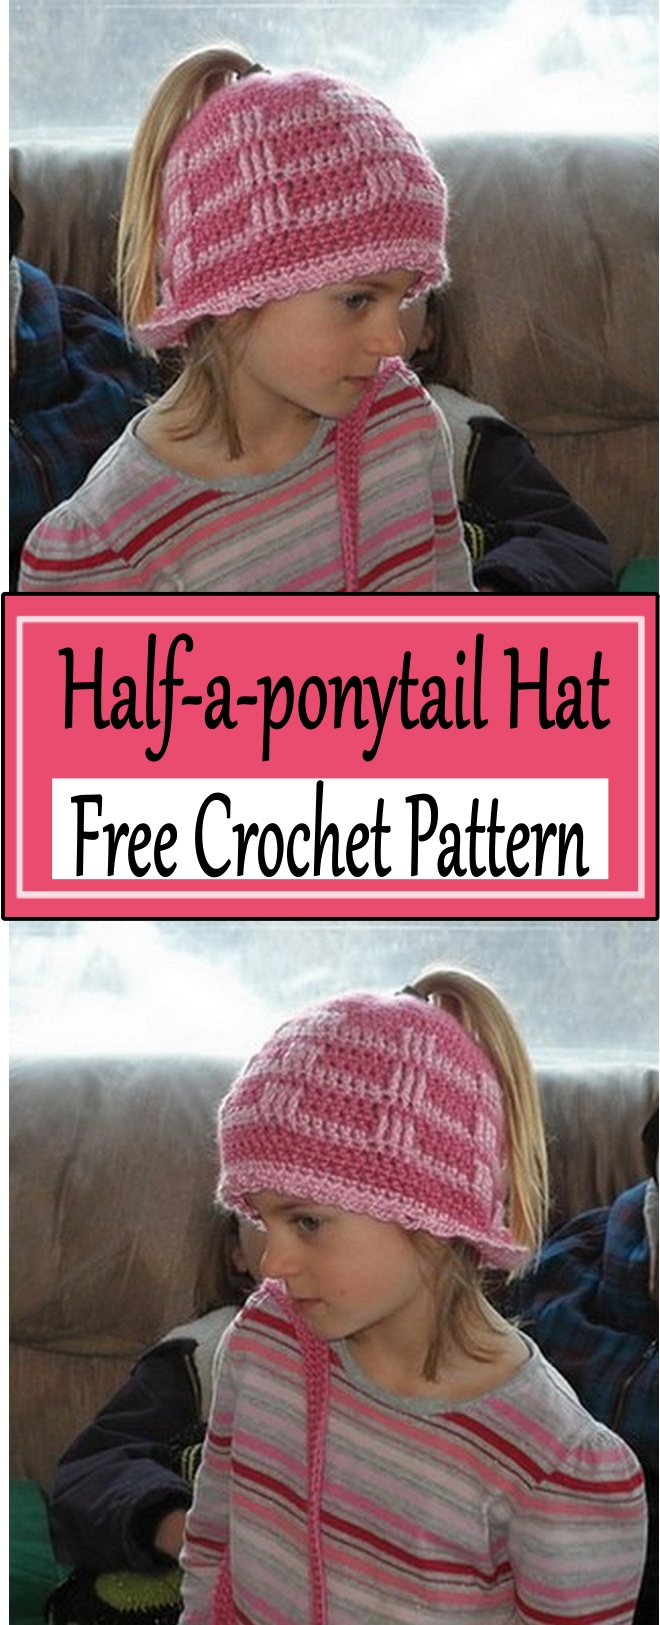 Half-a-ponytail Hat